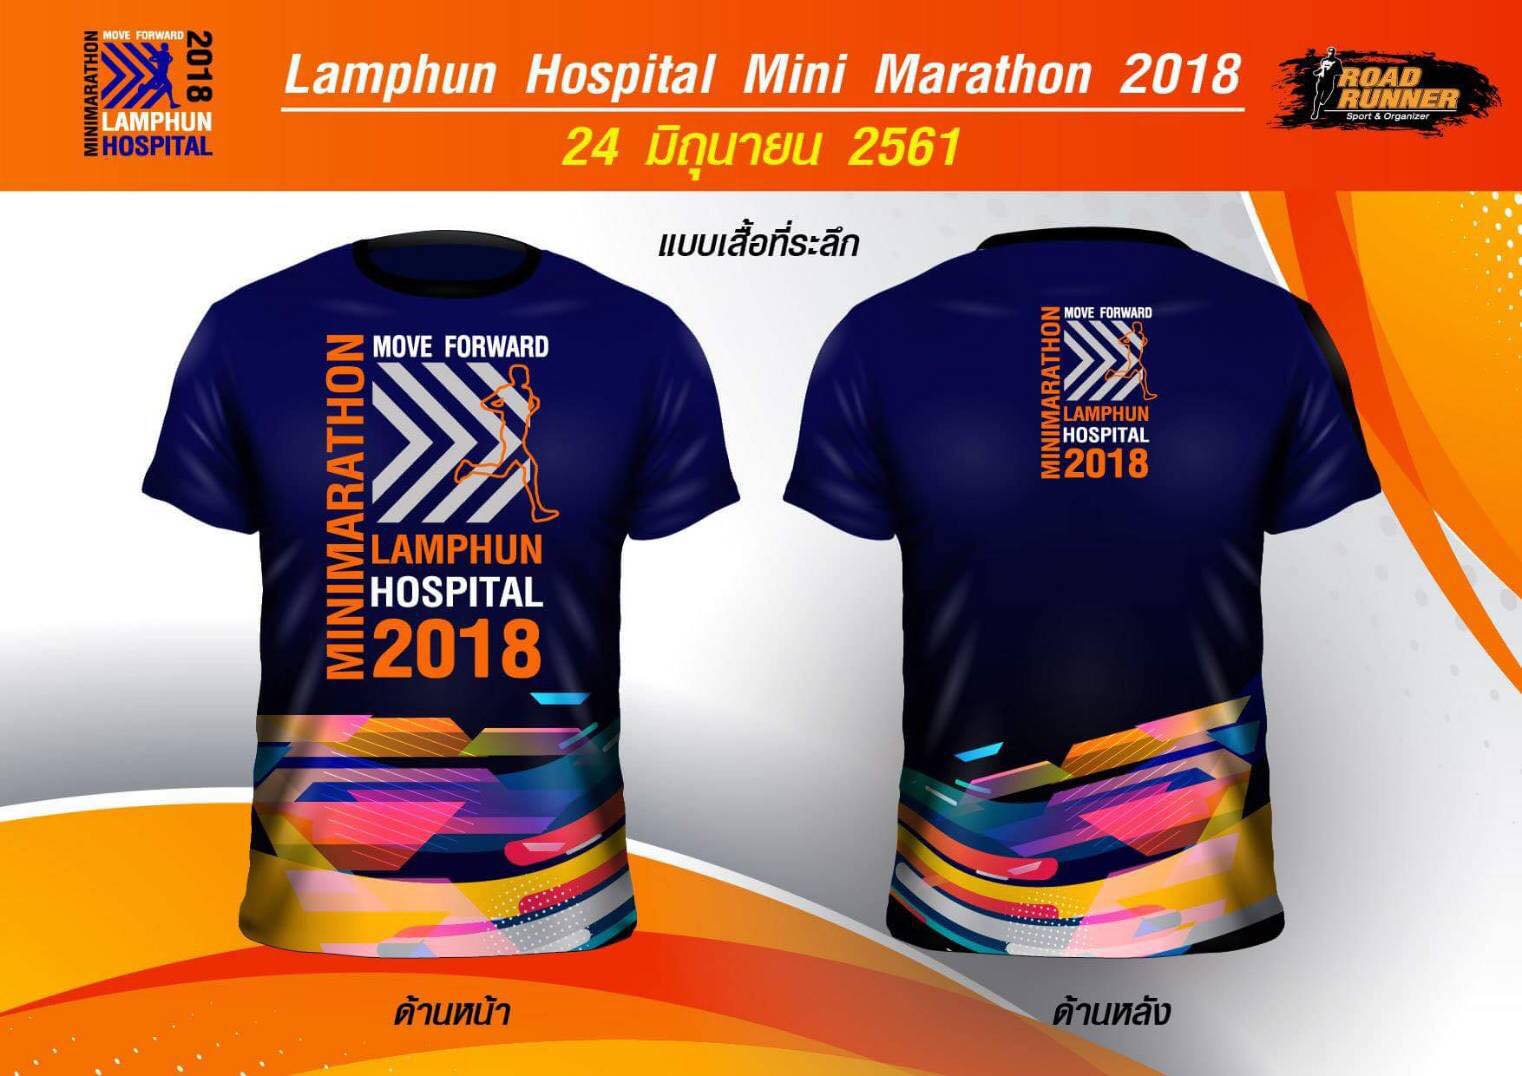 Lamphun Hospital Mini Marathon 2018